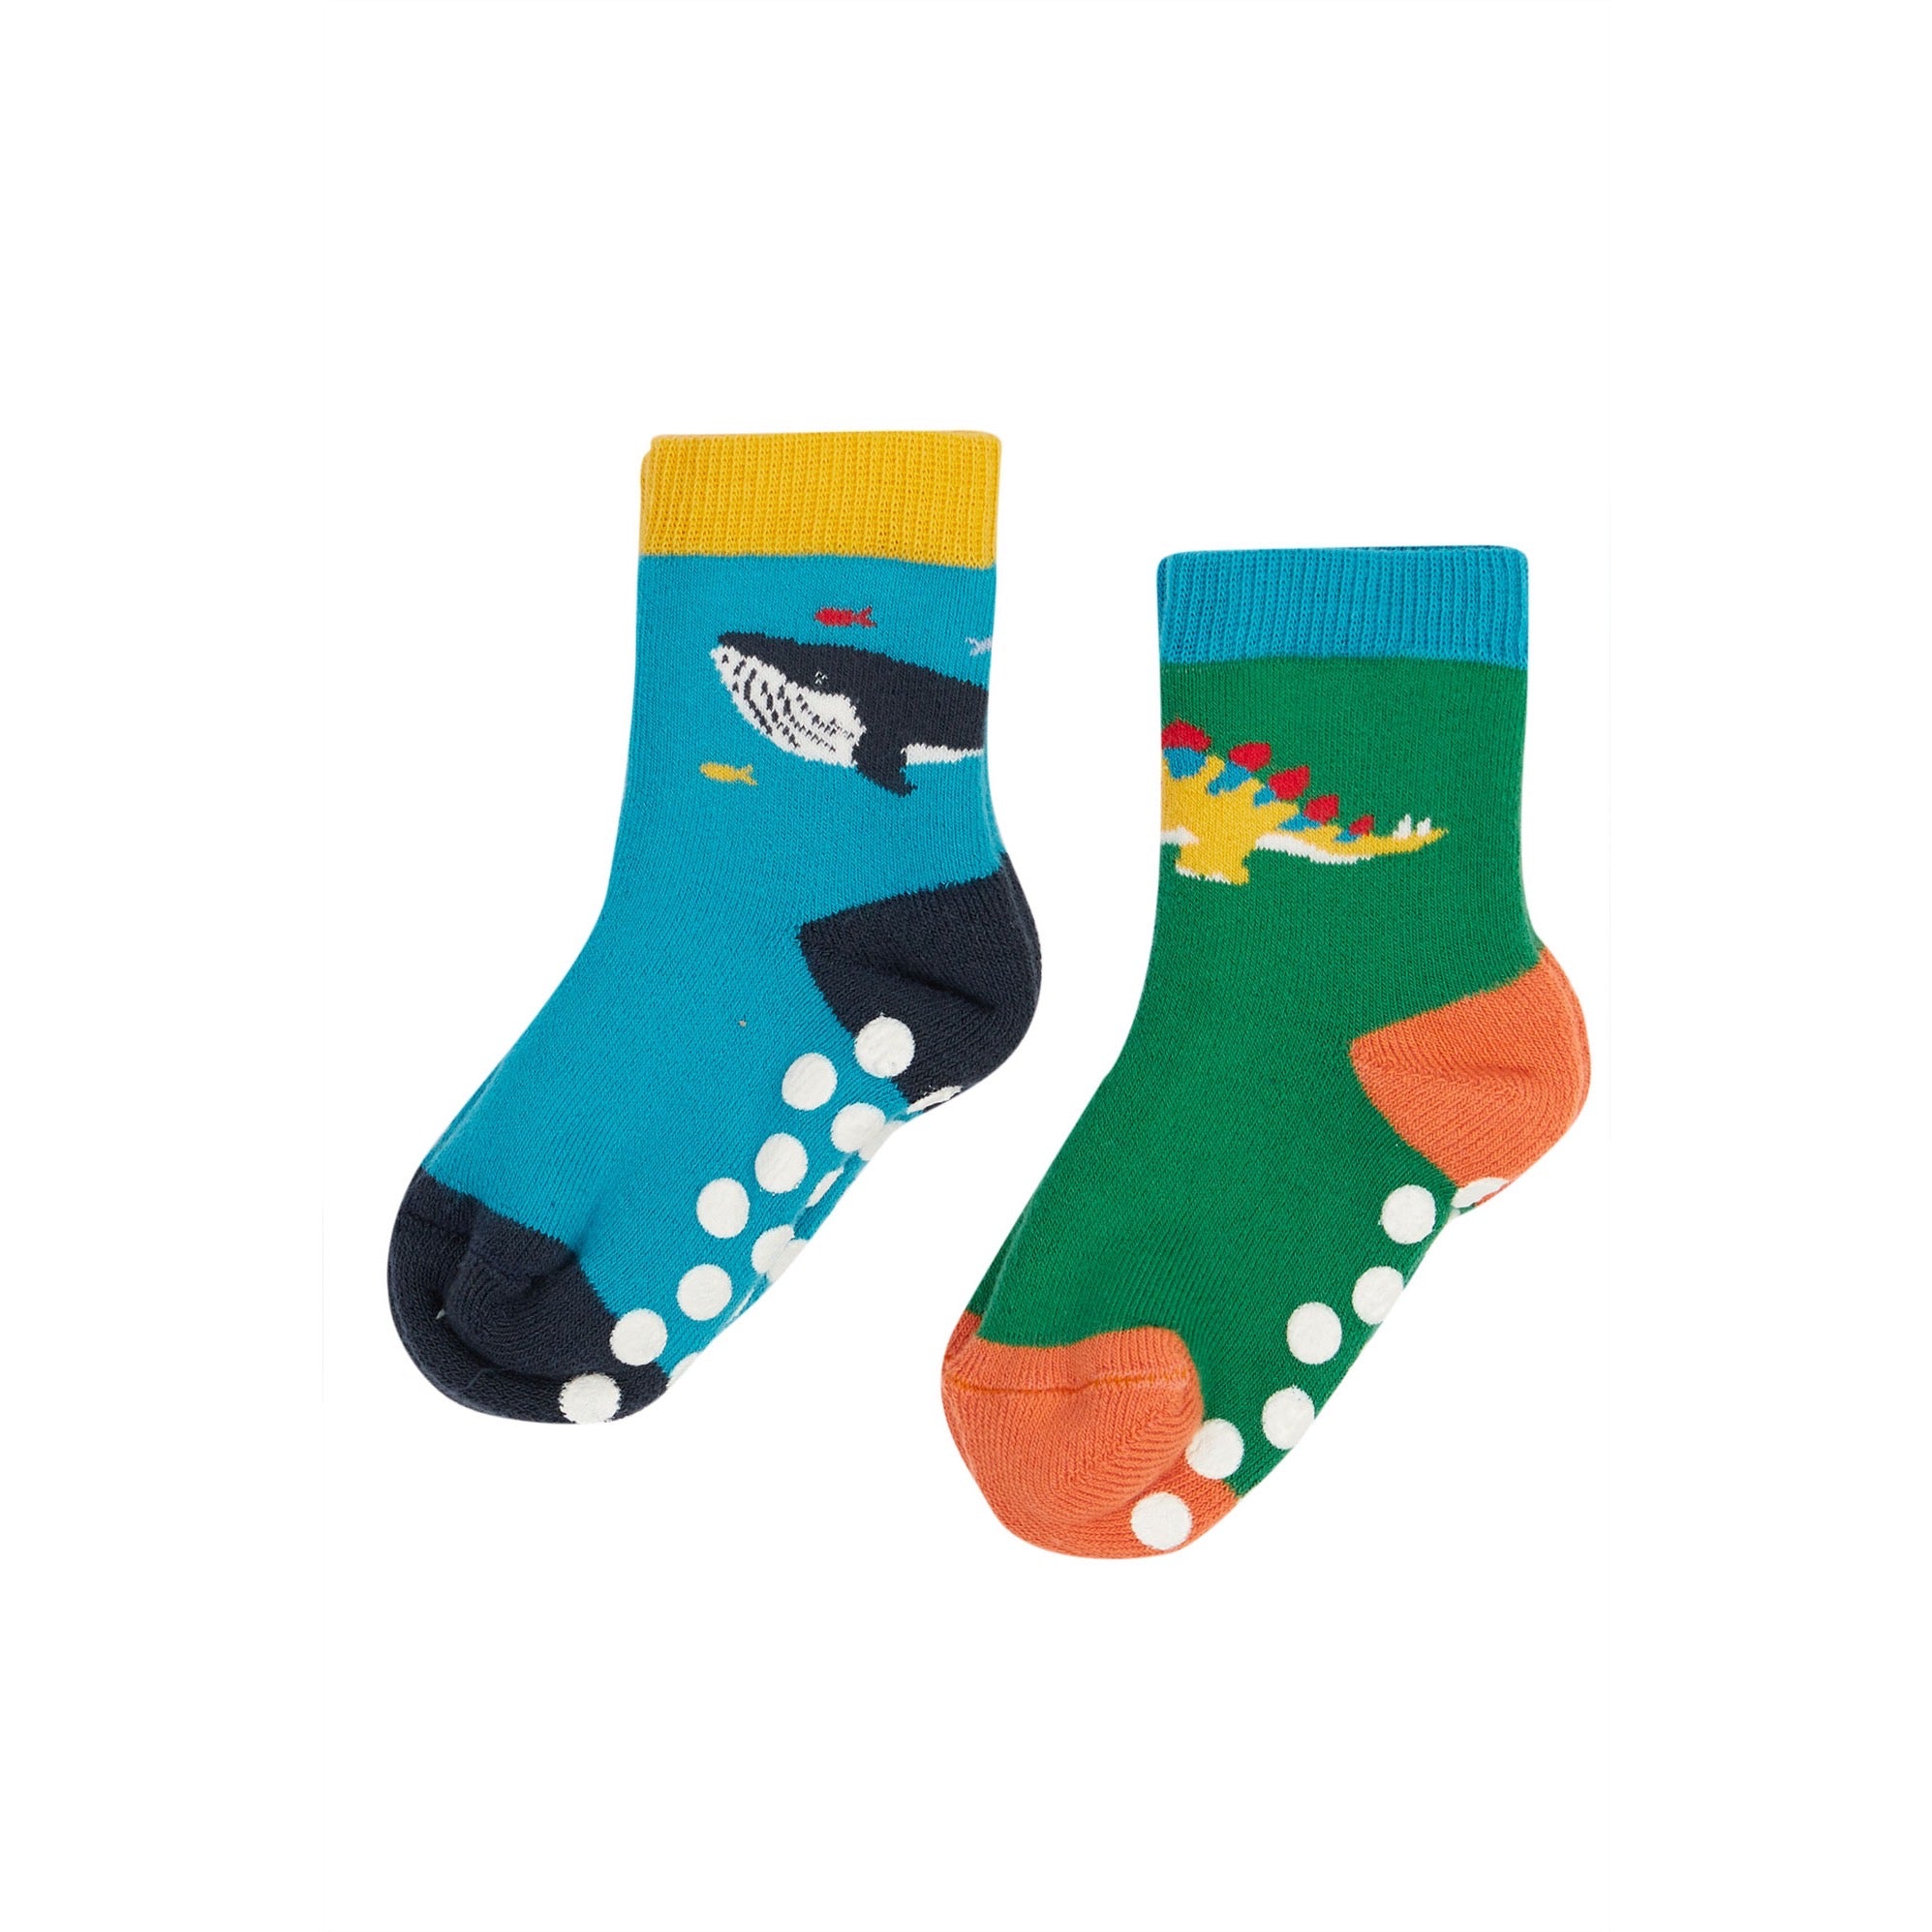 Frugi 2 Pack Grippy Socks Sos302wha Whale Dino Clothing 0-6M / Multi,6-12M / Multi,1-2YRS / Multi,2-4YRS / Multi